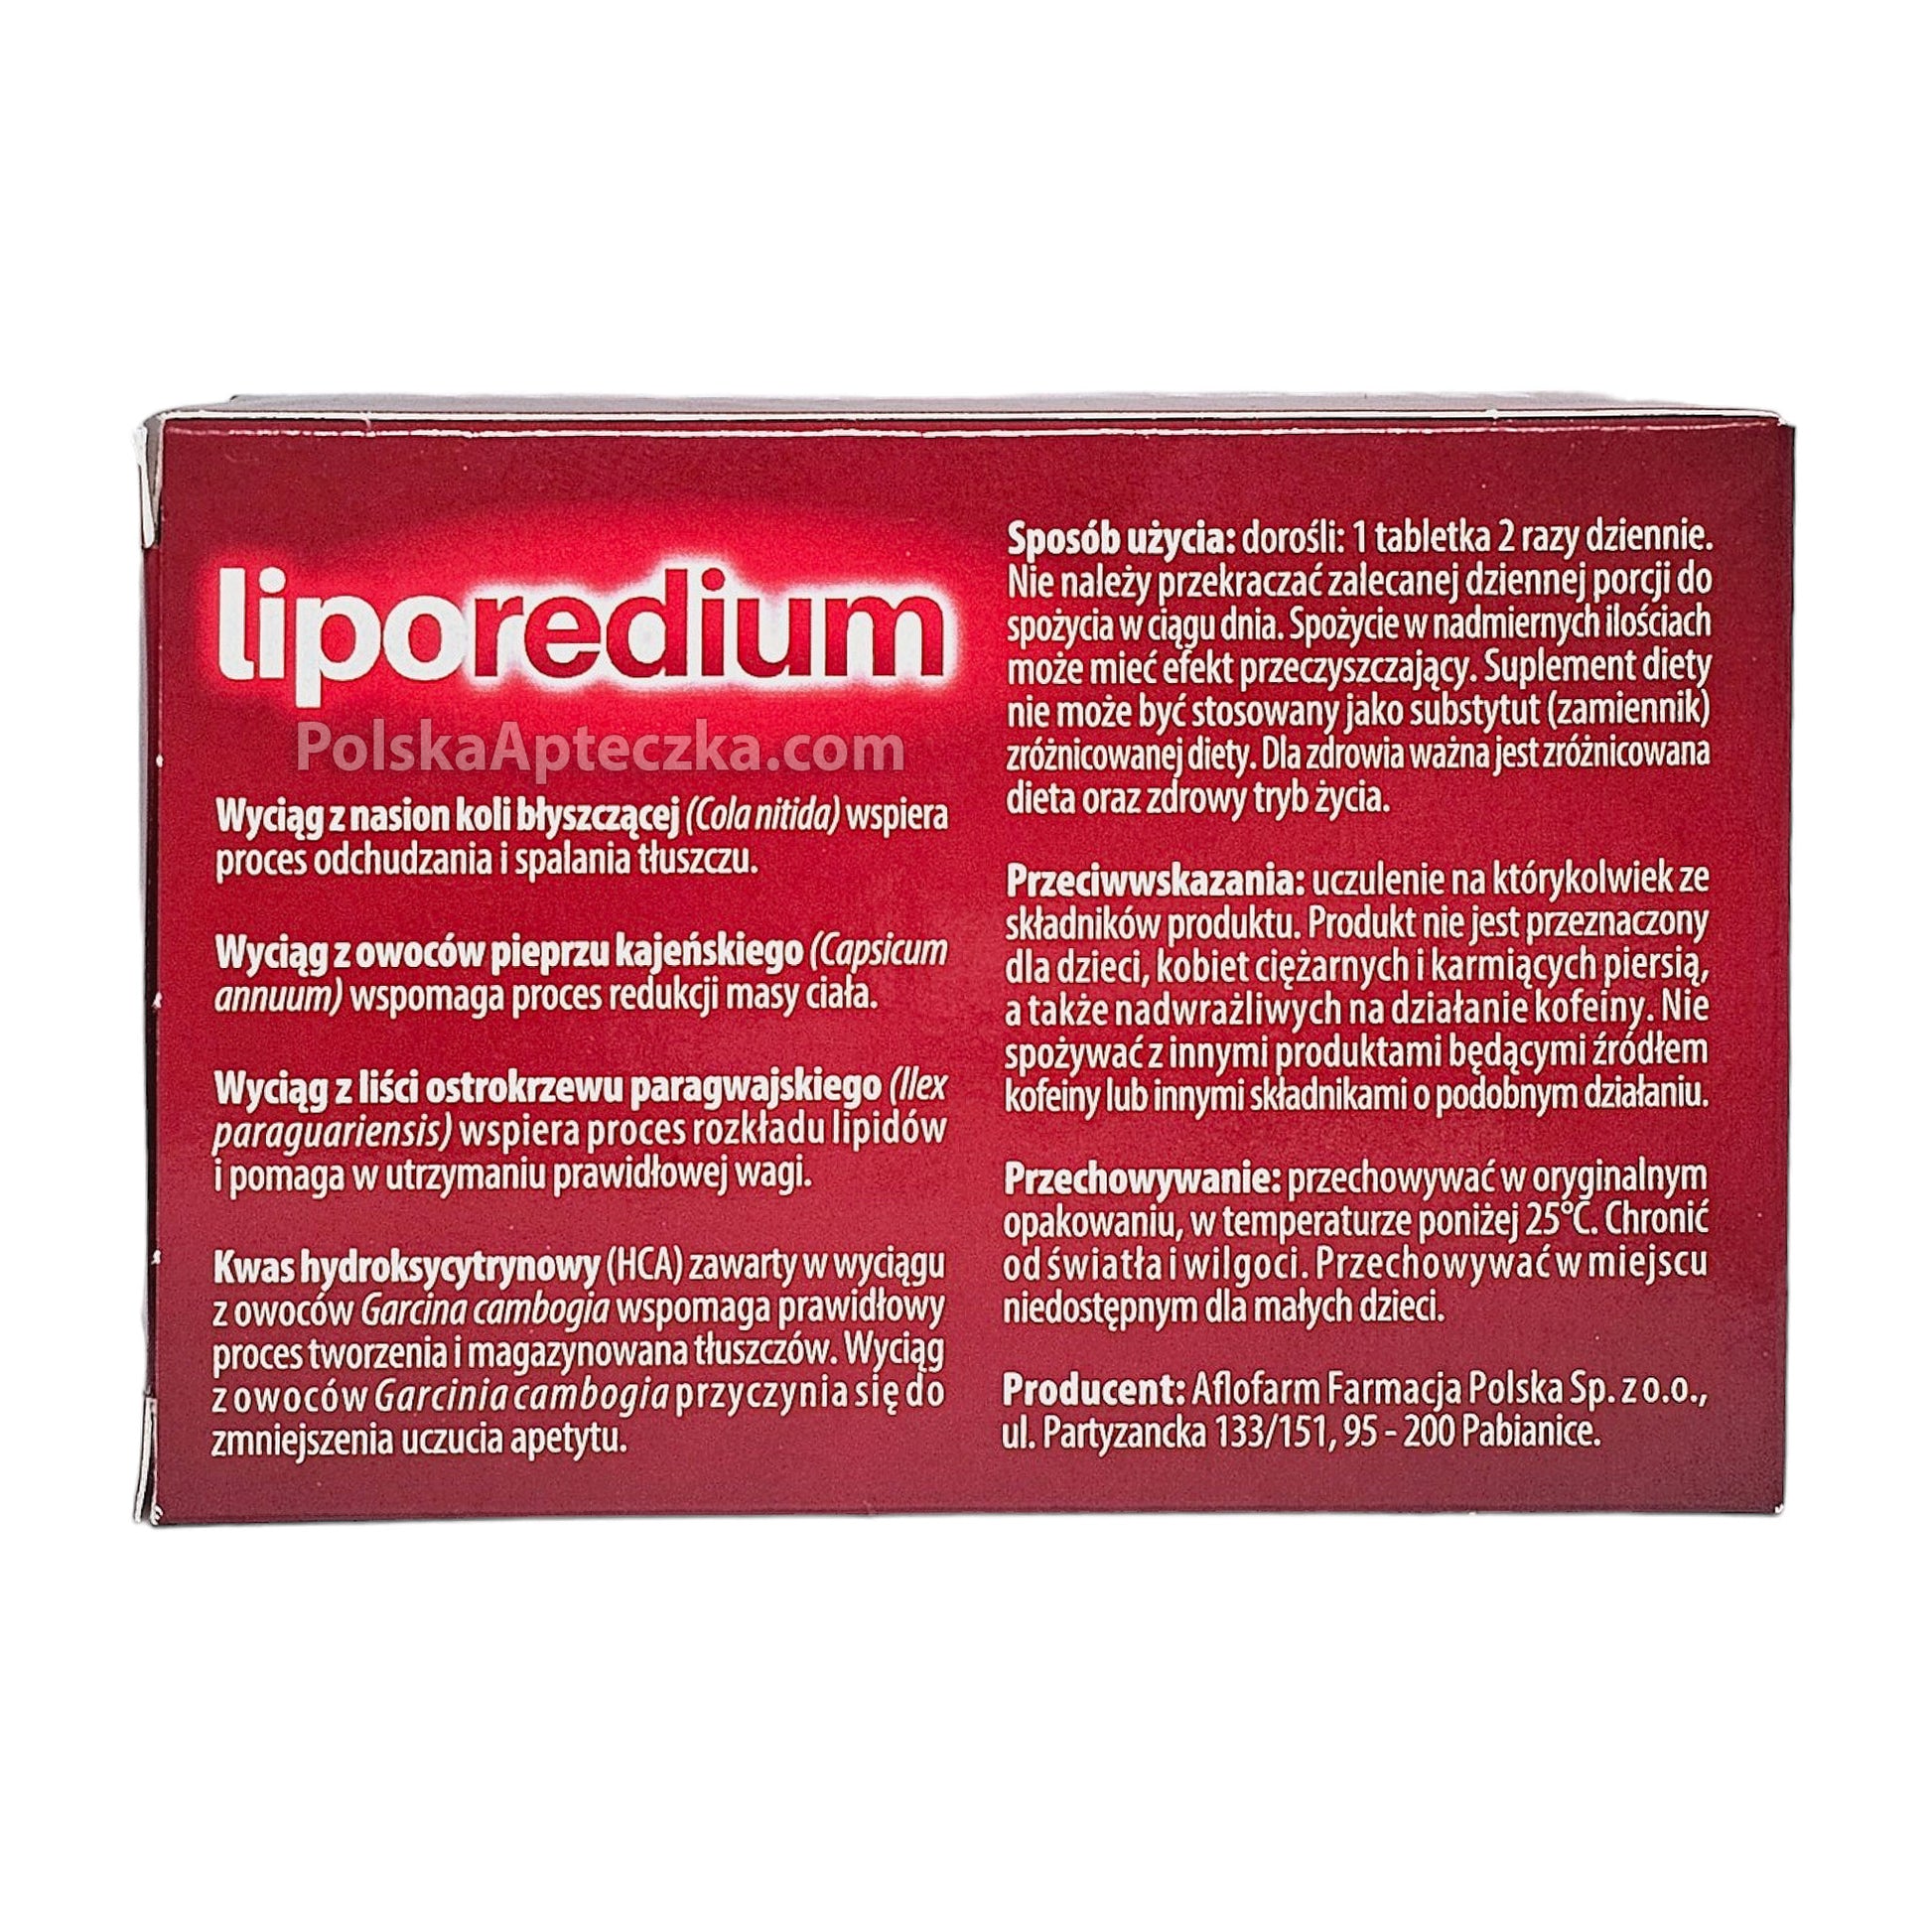 liporedium tablets usa